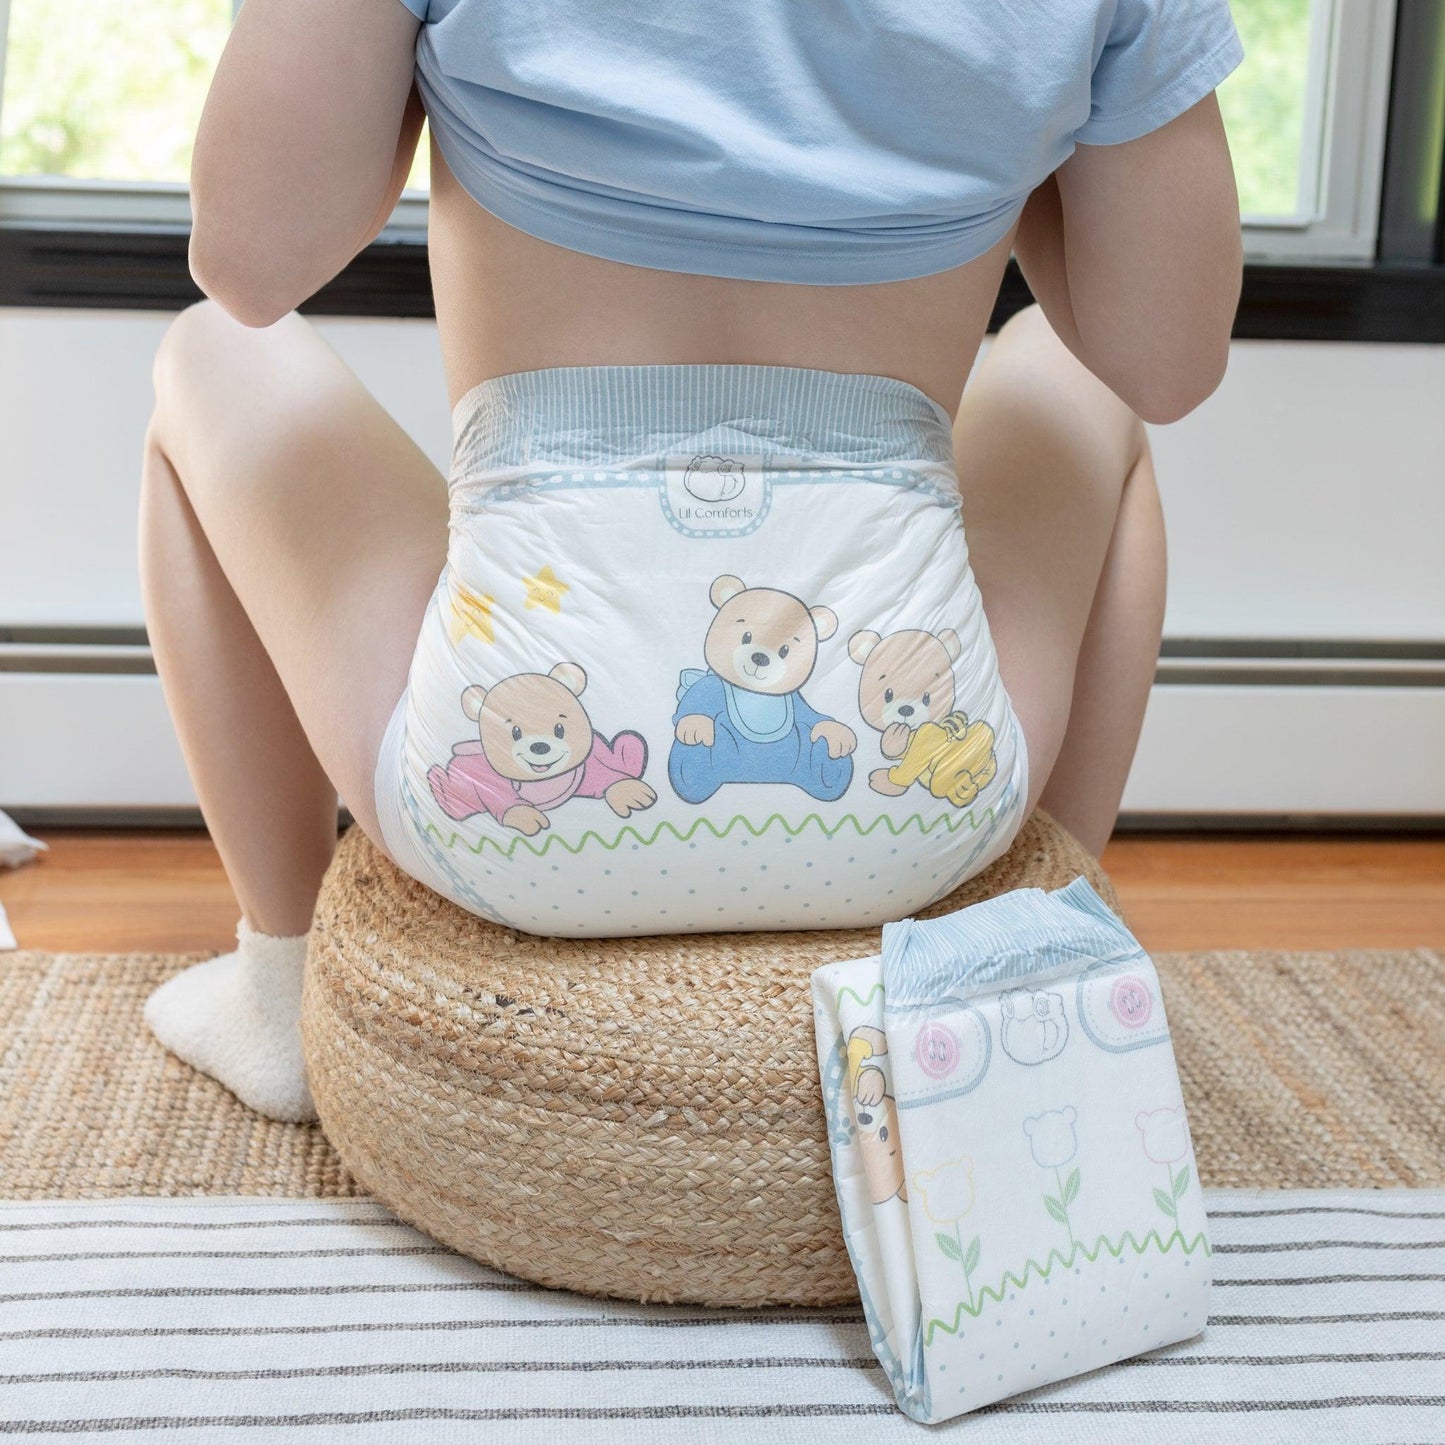 Comfy Cubz- Adult Diapers